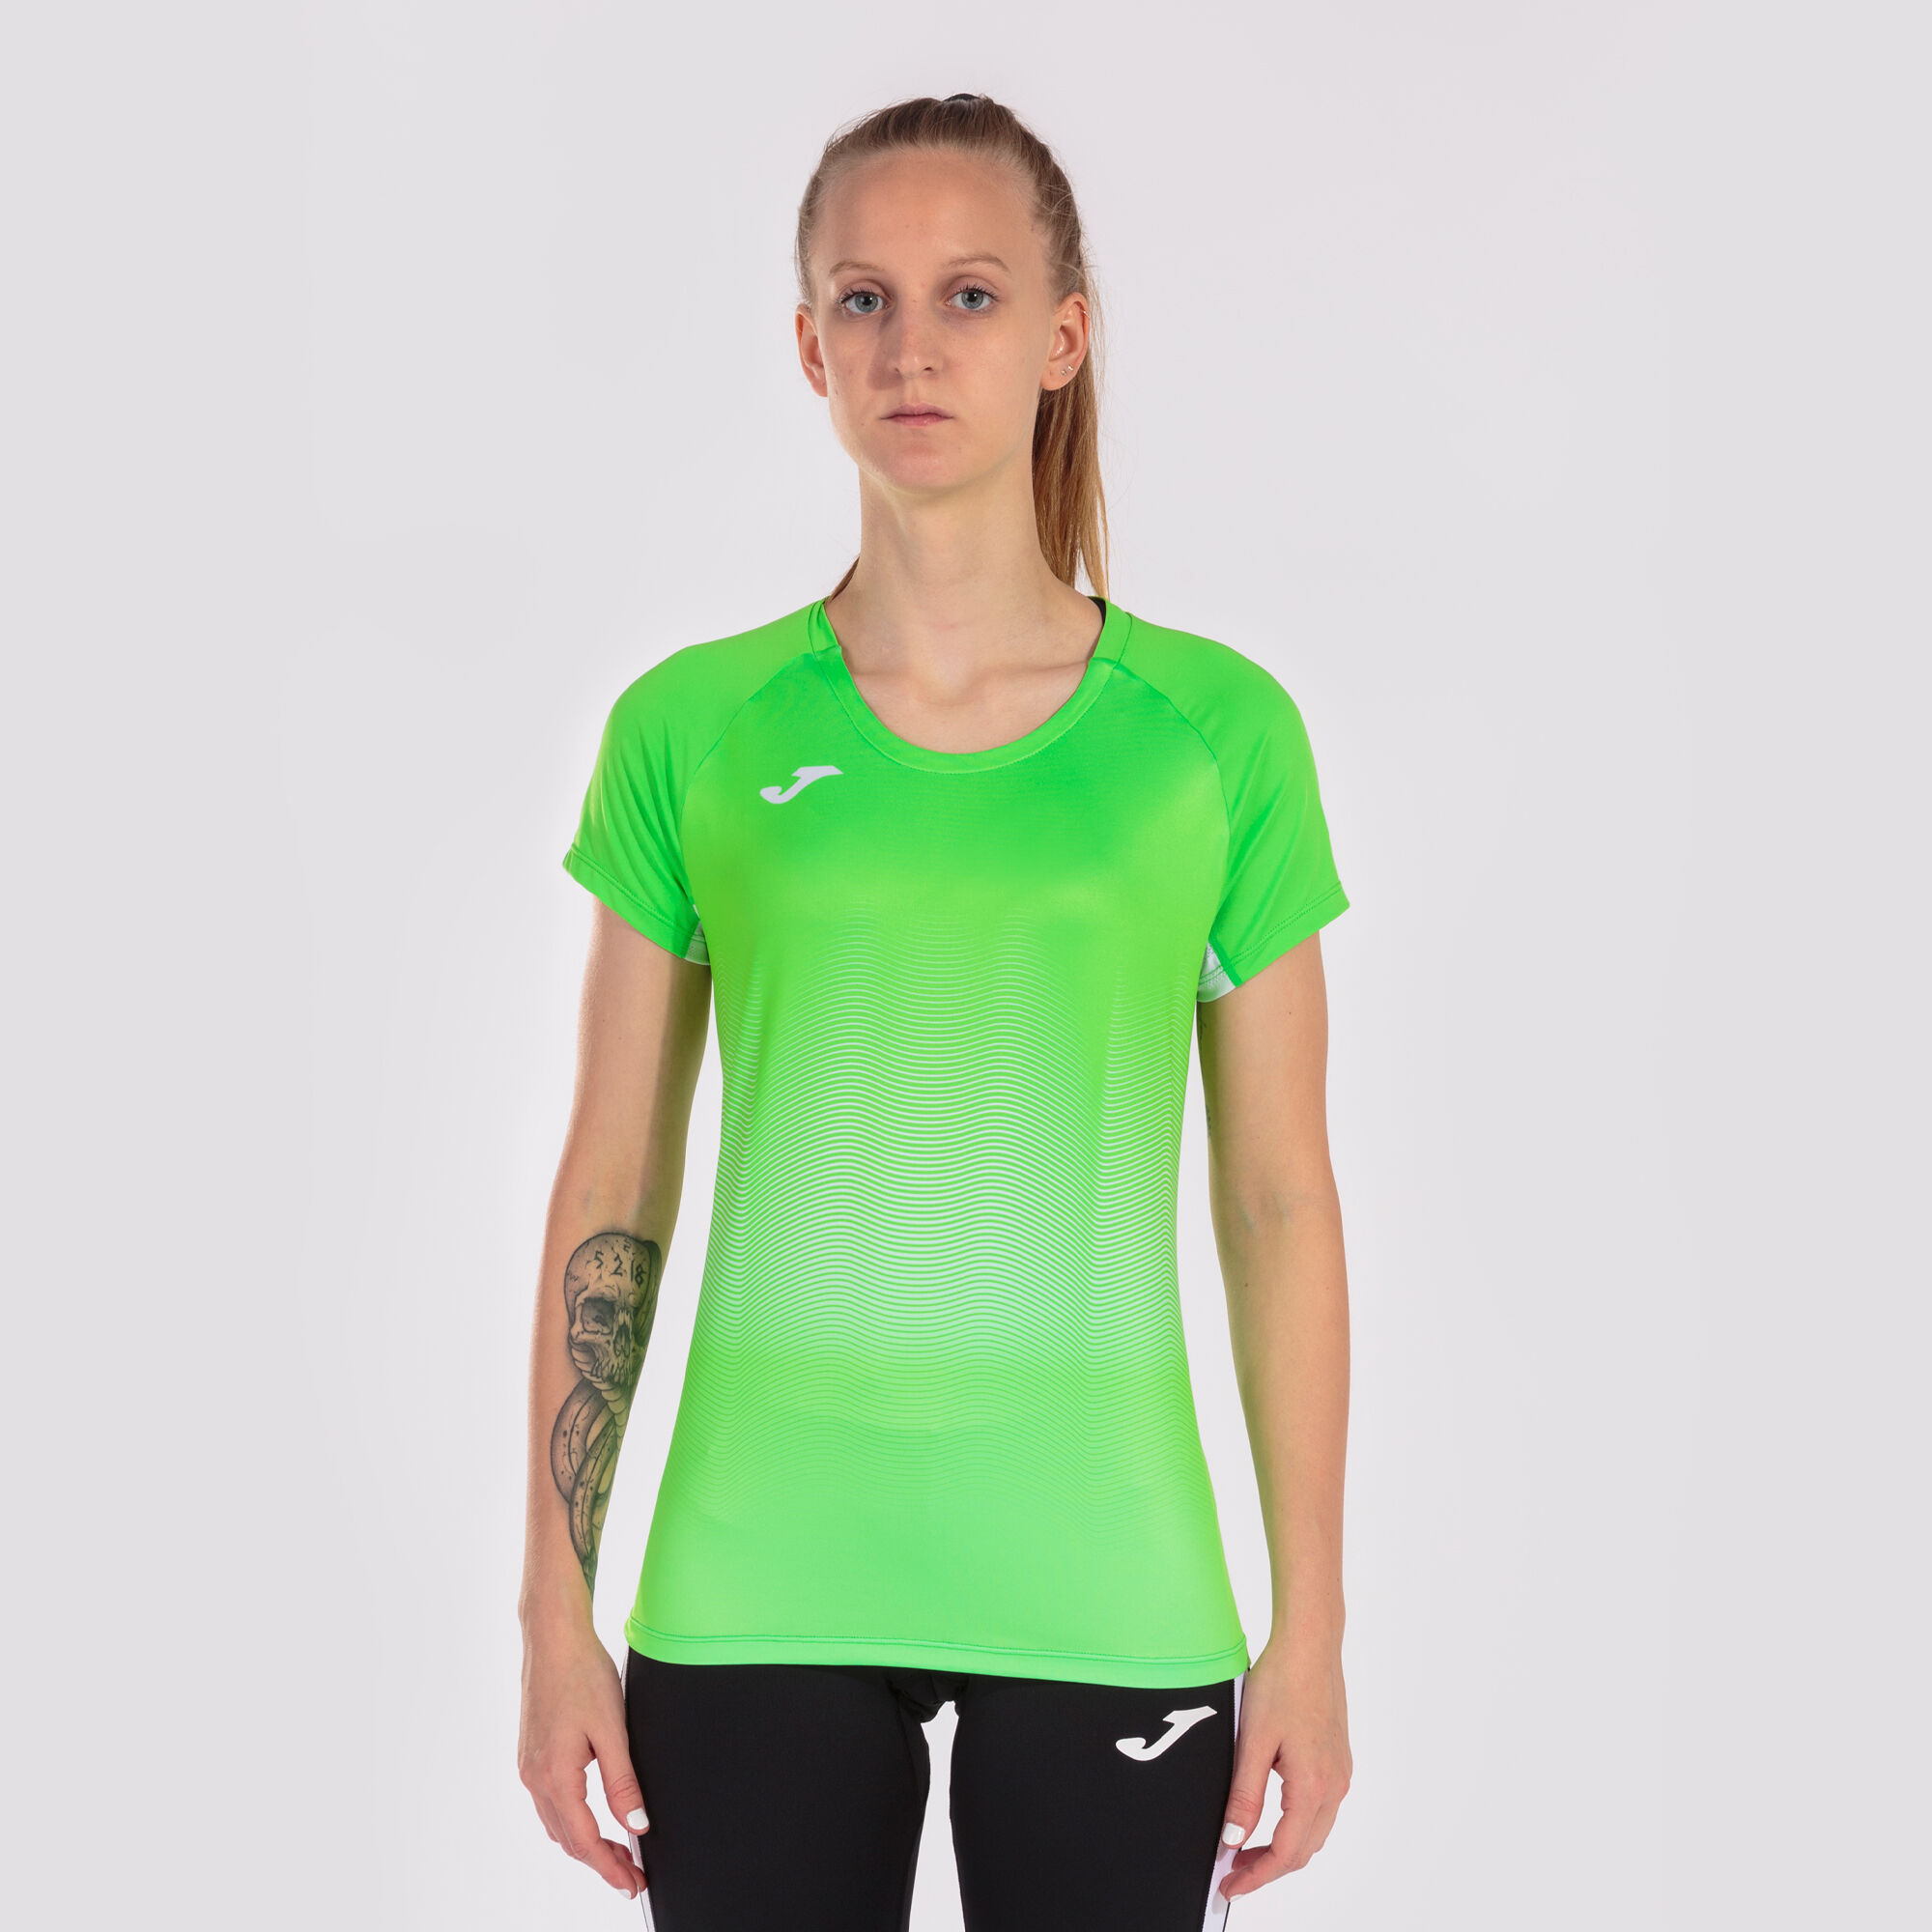 Shirt short sleeve woman Elite VII fluorescent green white